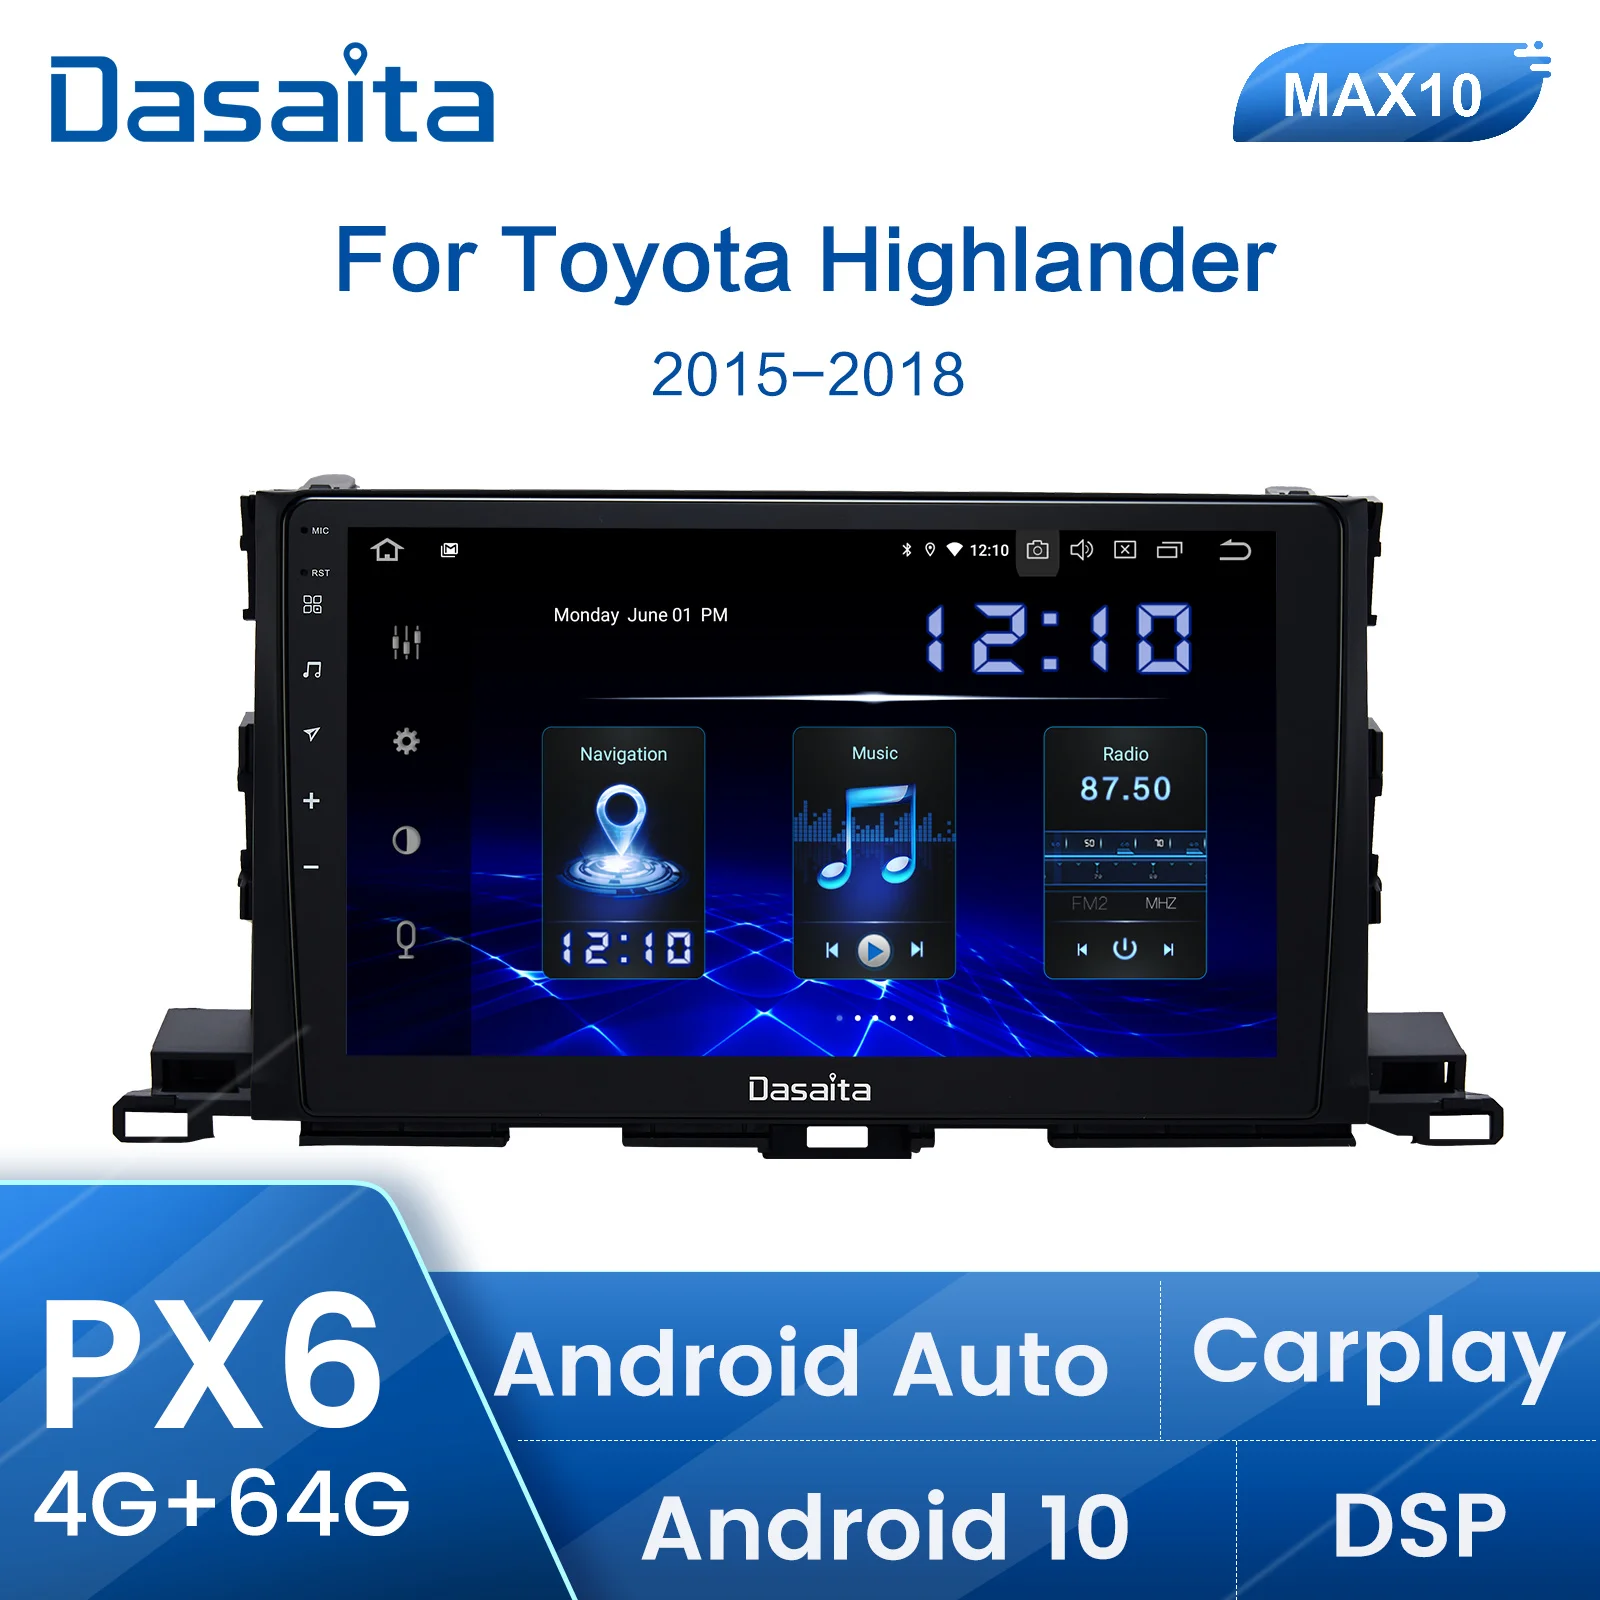 

Dasaita Car Multimedia 10.2" HD Touch Screen Android 10.0 for Toyota Highlander Radio 2015 2016 2017 2018 GPS DSP BT5.0 MAX10